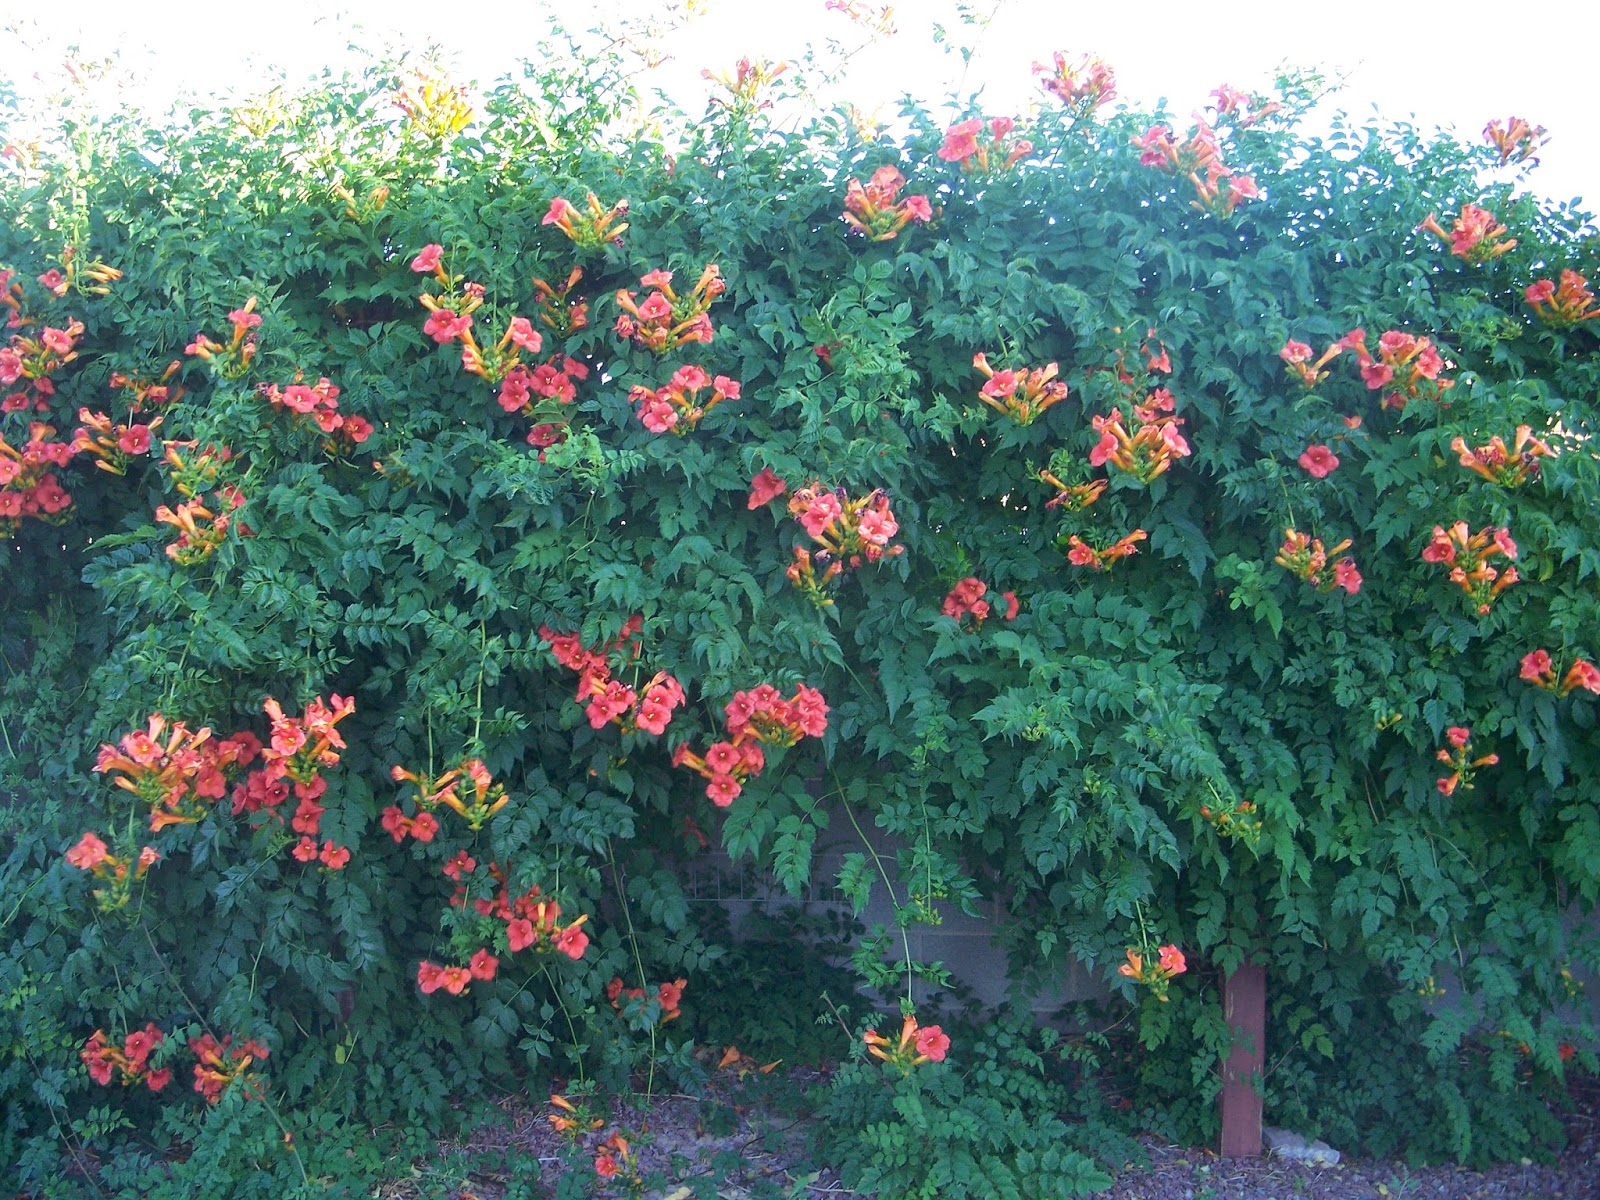 climbing vine orange trumpet shaped flowers